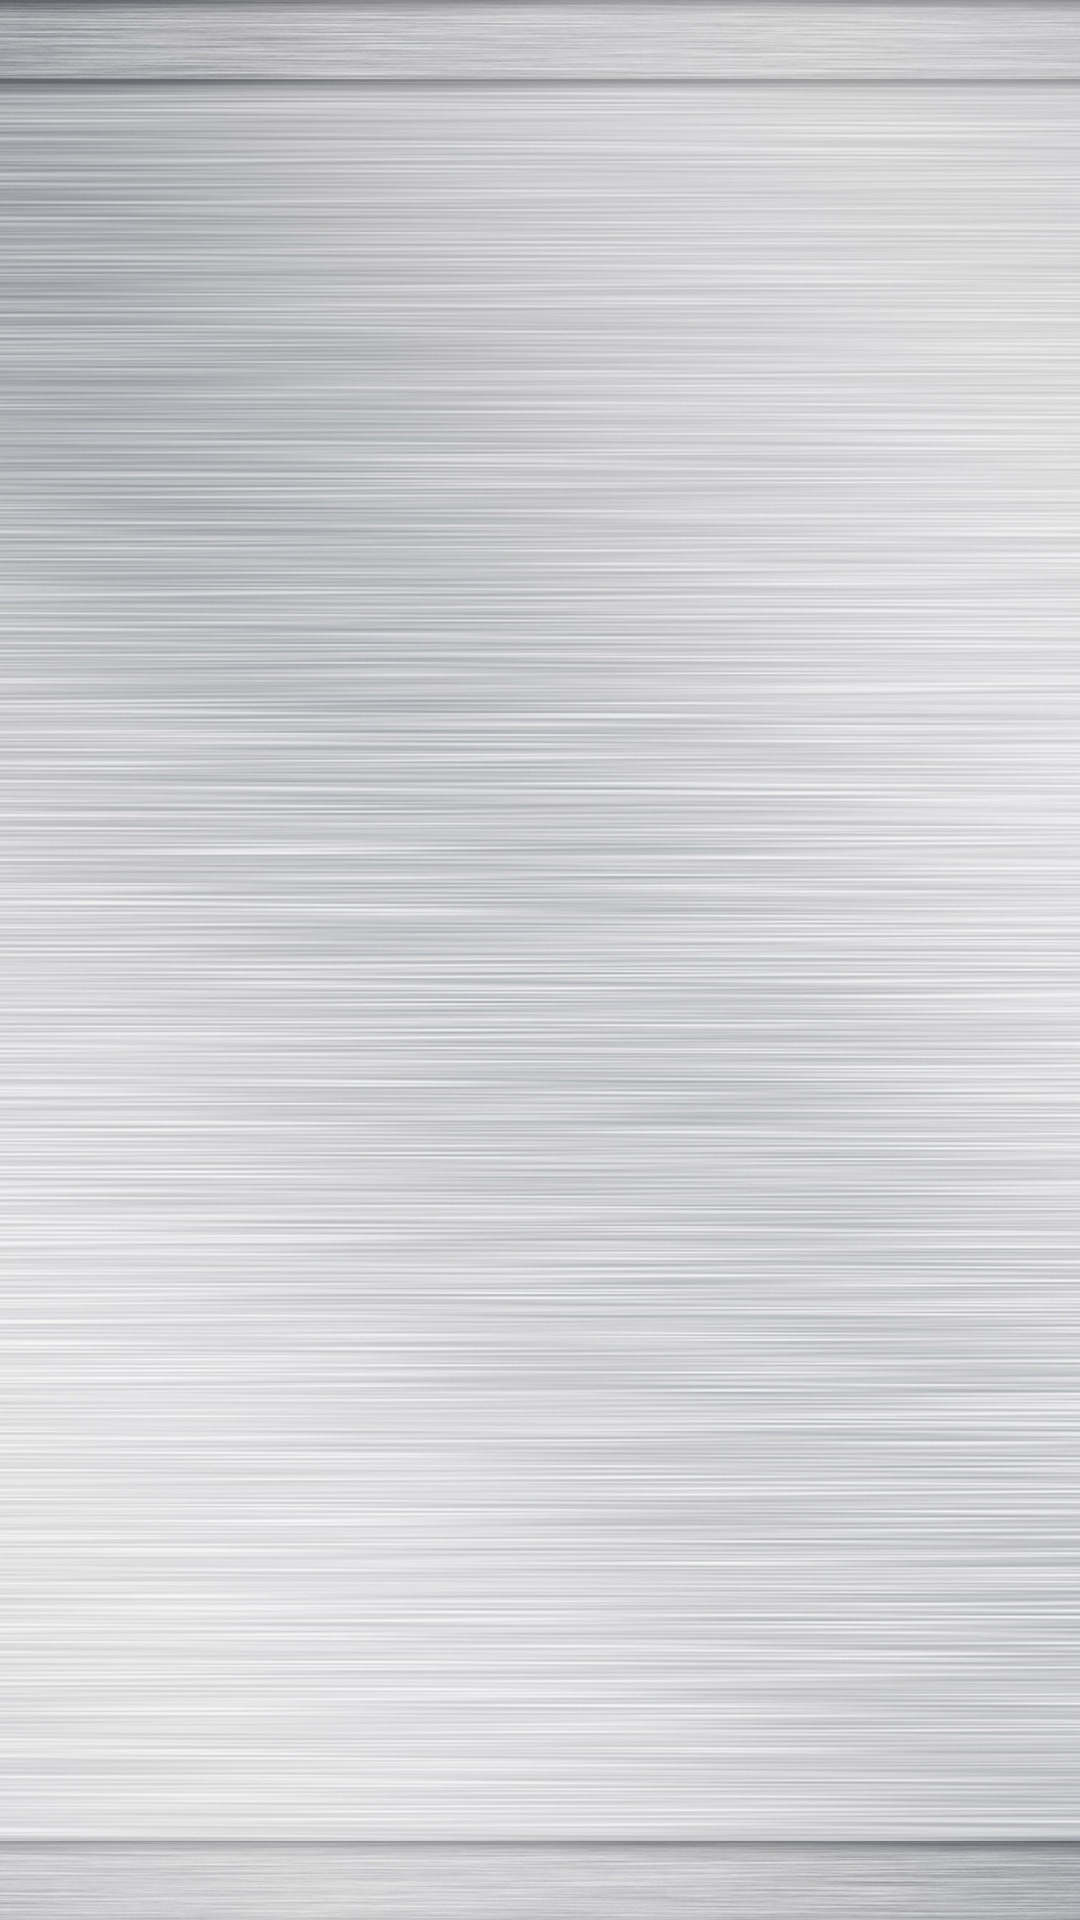 Brushed Aluminium Horizontal Texture Cool Android Wallpaper